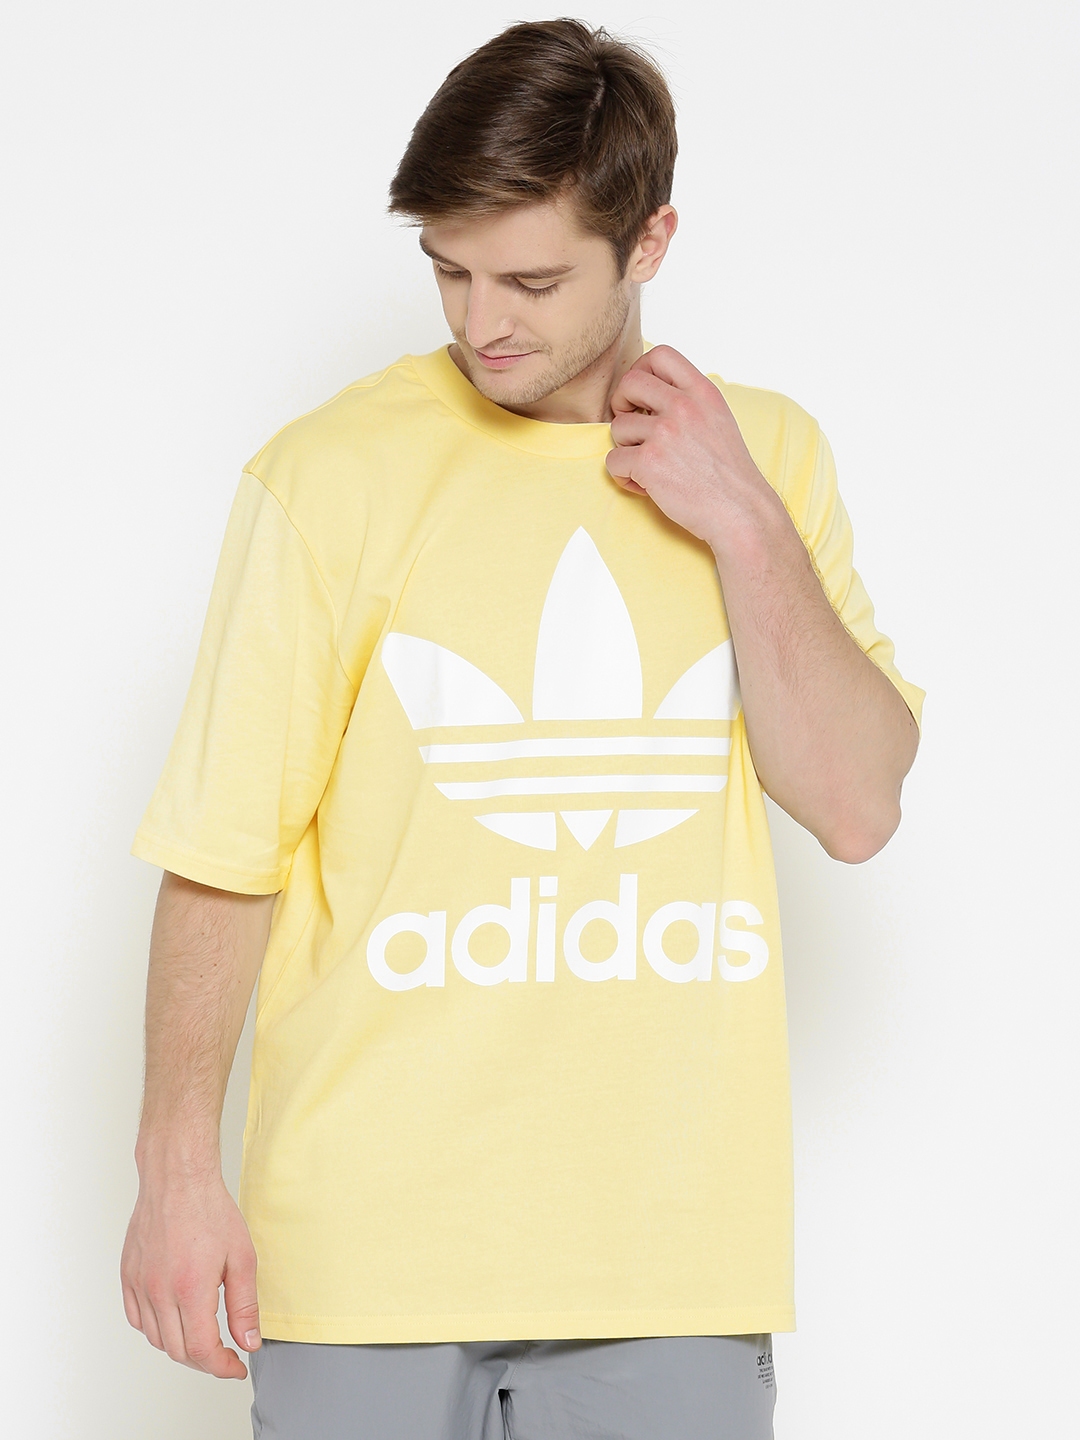 Buy ADIDAS Originals Yellow Oversized Brand Print T Shirt - Tshirts for Men 2450824 Myntra